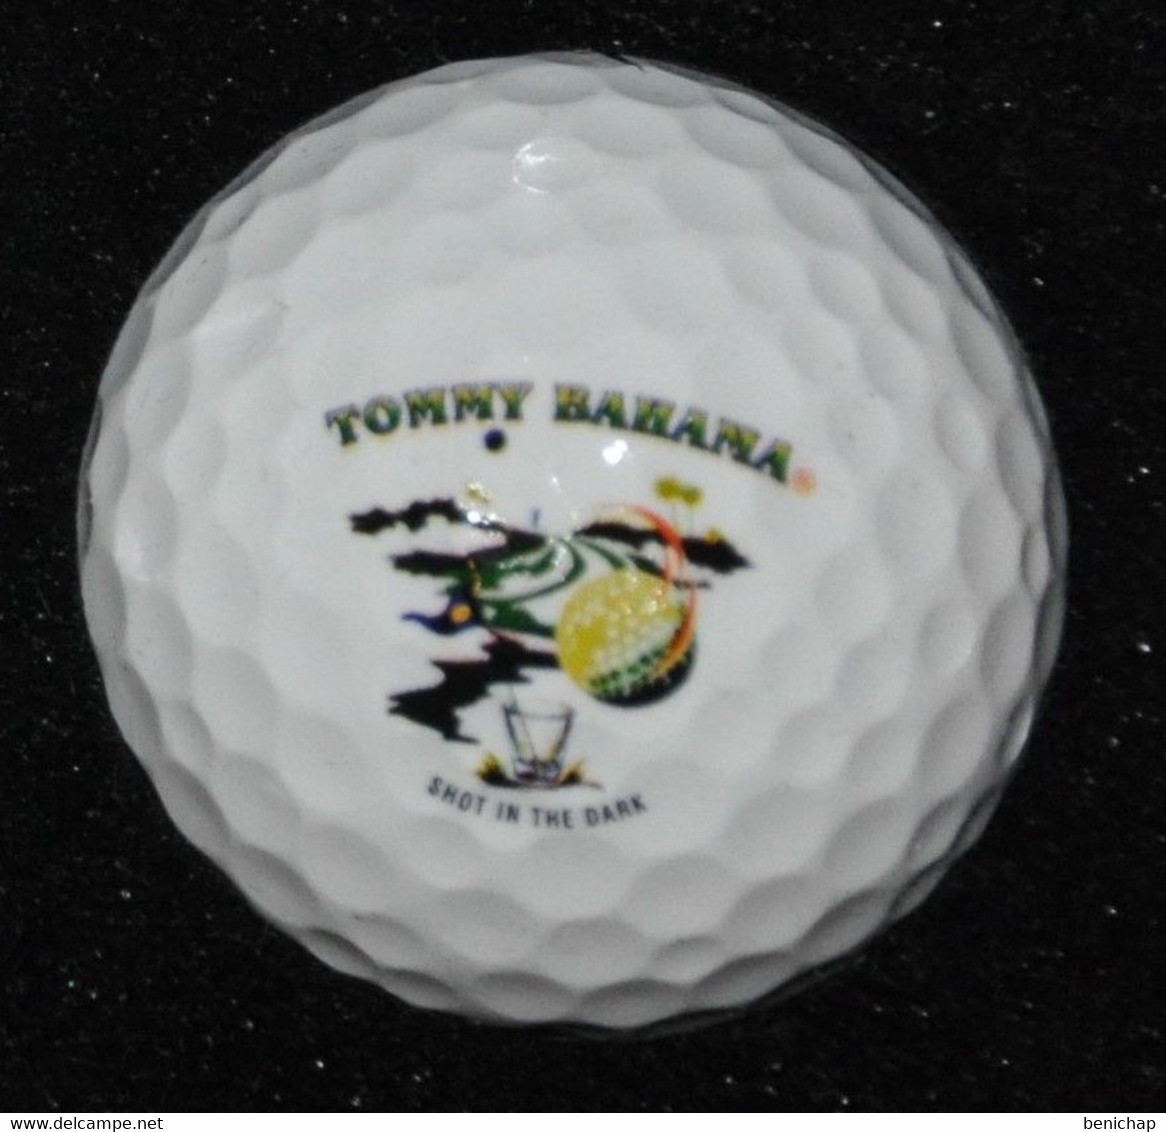 Collector 6 NIKE Precisor Power Distance Soft Island Golf Balls - Tommy Bahama.